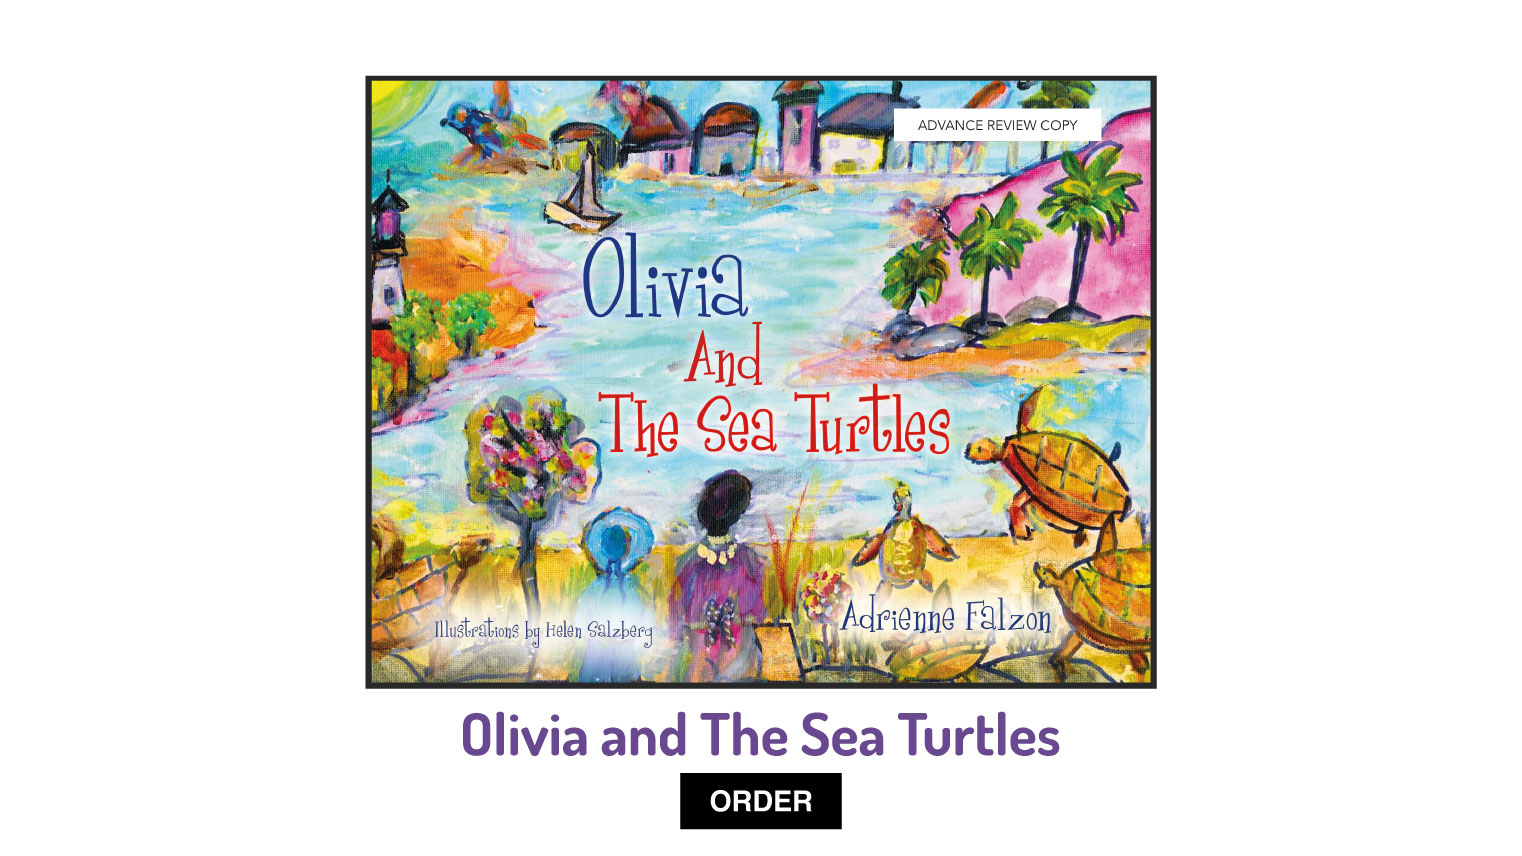 Olivia and The Sea Turtles